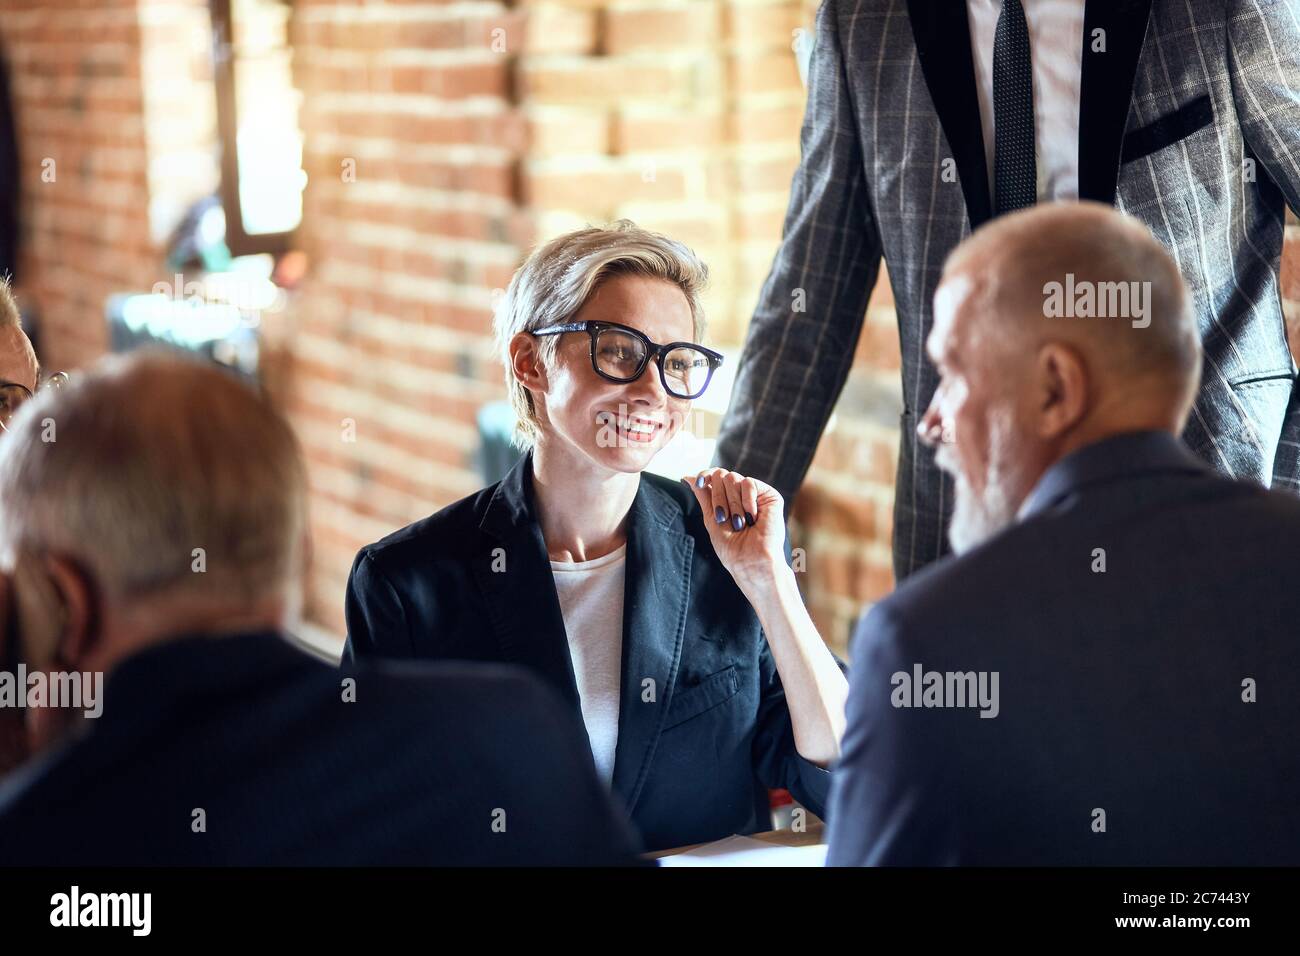 Focused on blonde caucasian woman in glasses smile, talk between backs of two men Stock Photo